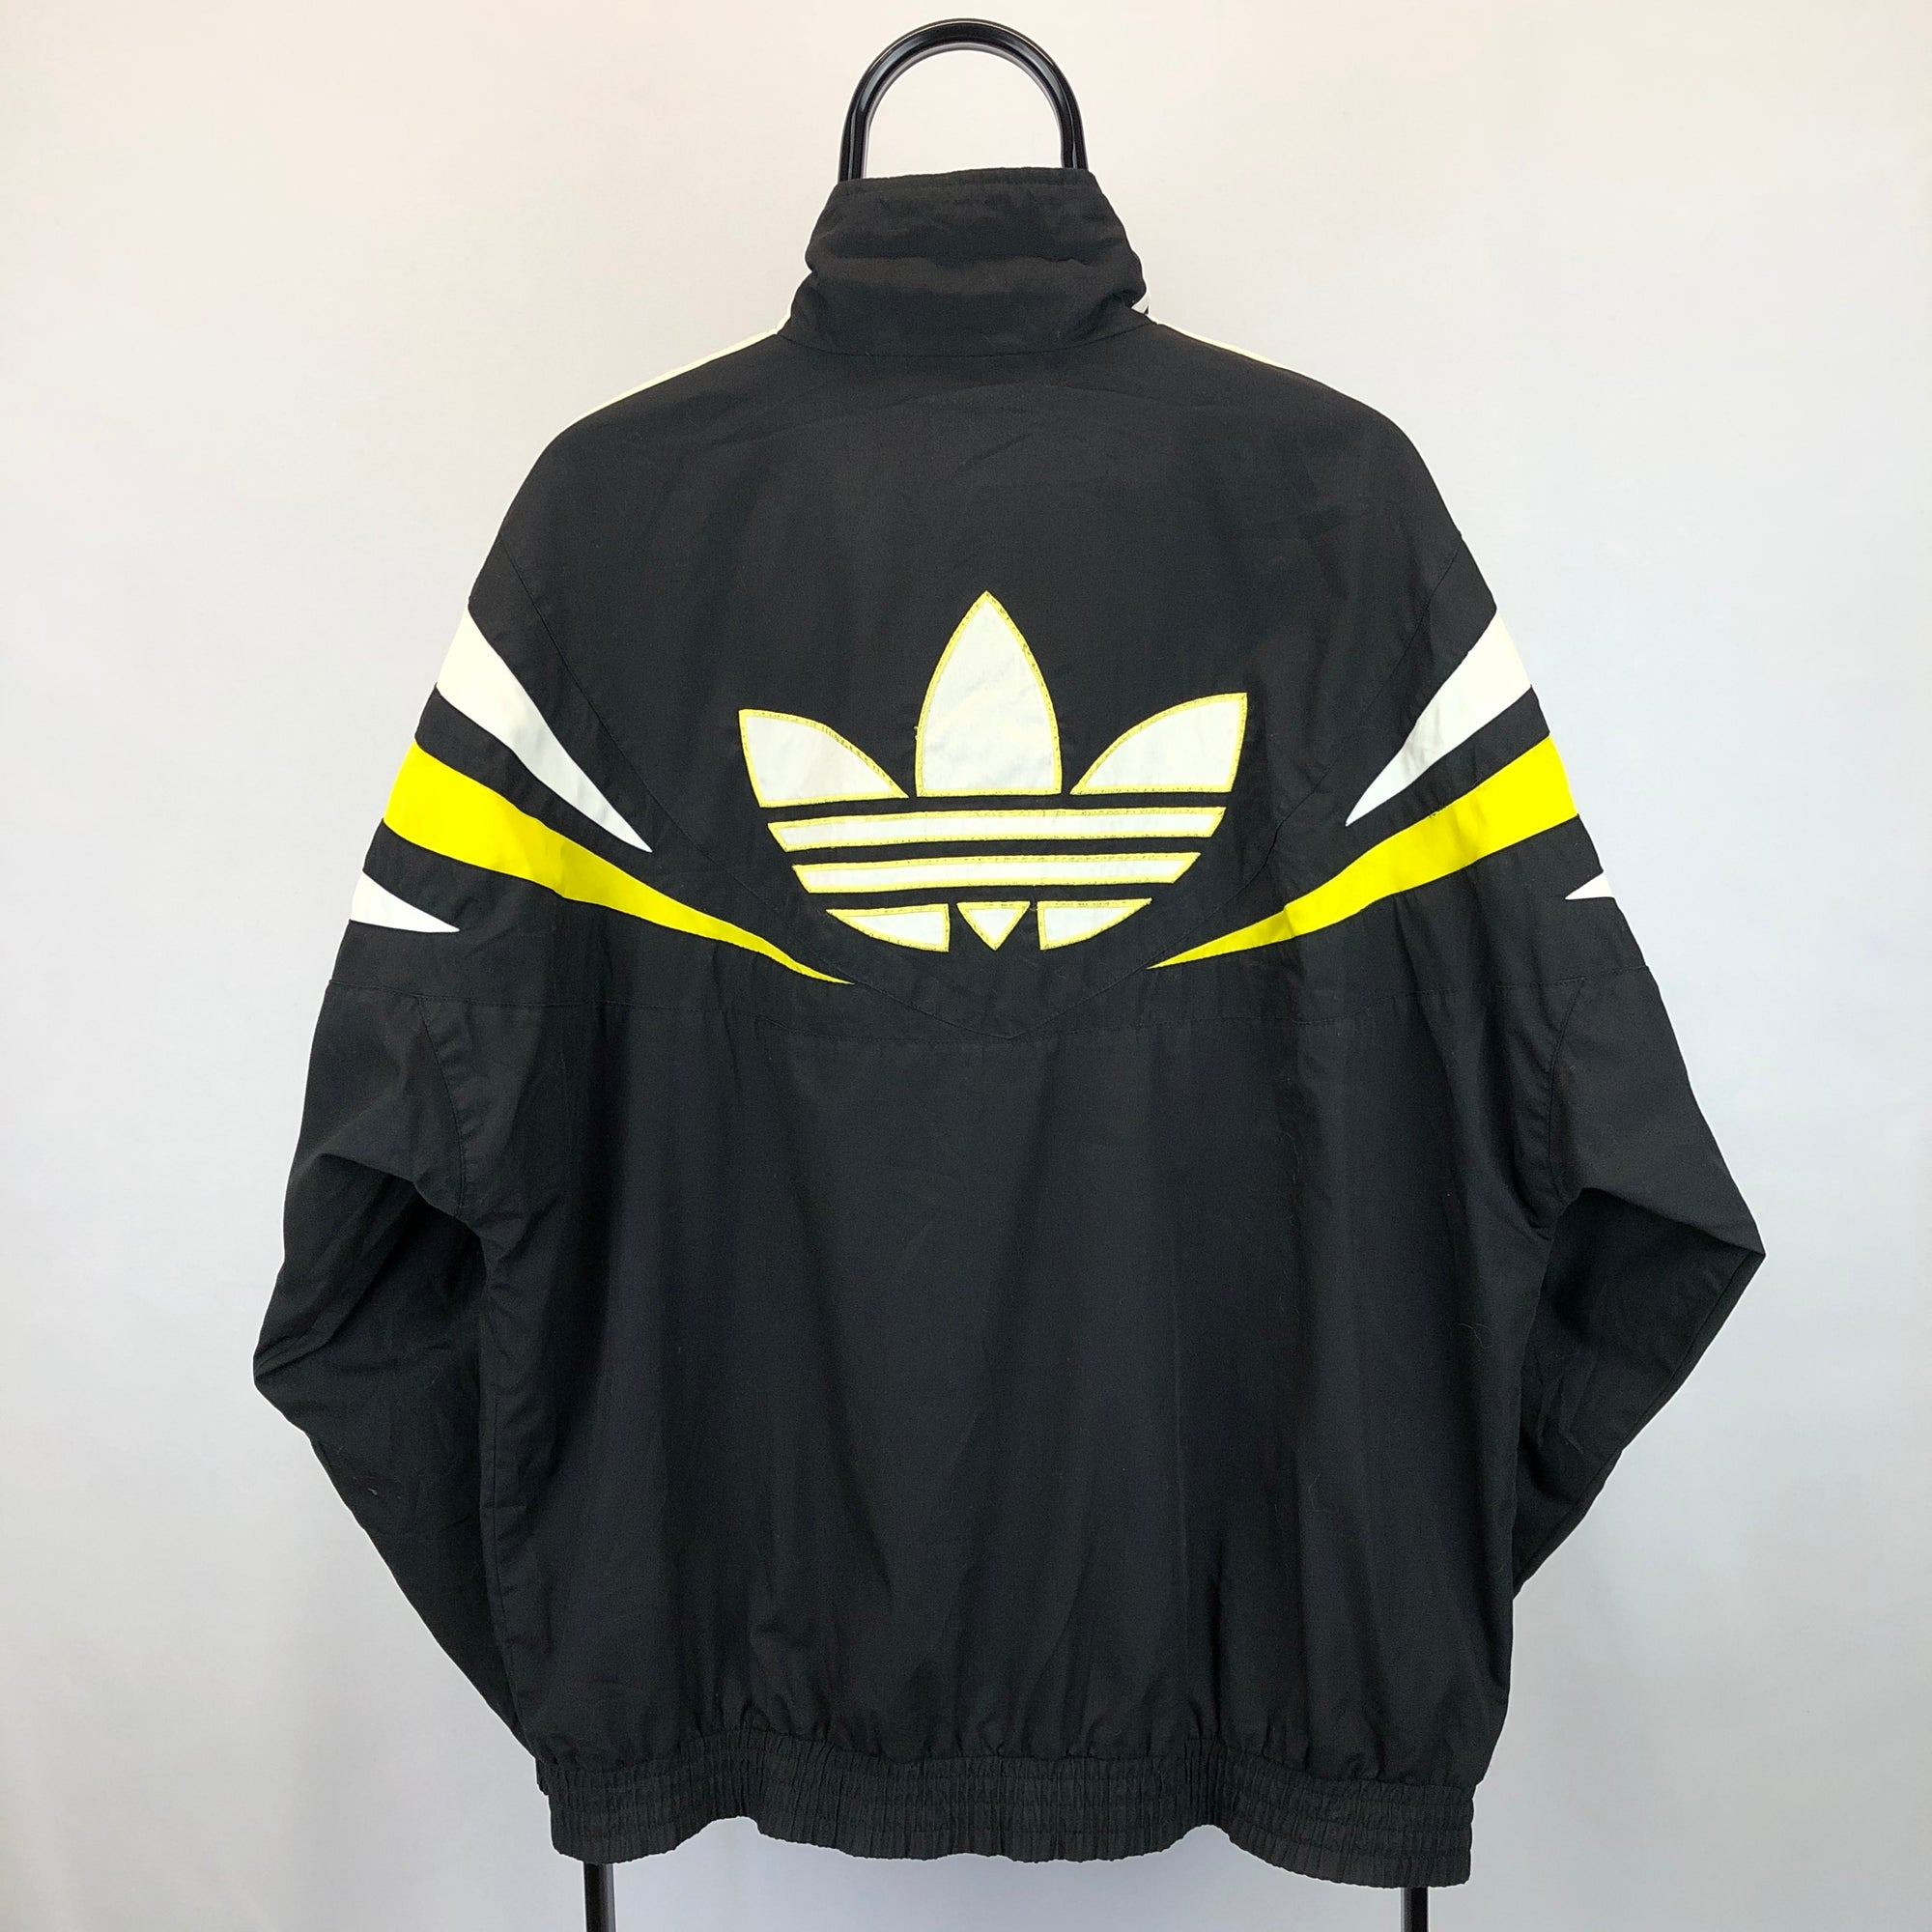 Vintage 80s Adidas Big Logo Track Jacket in Black/White/Yellow - Men's Large/Women's XL